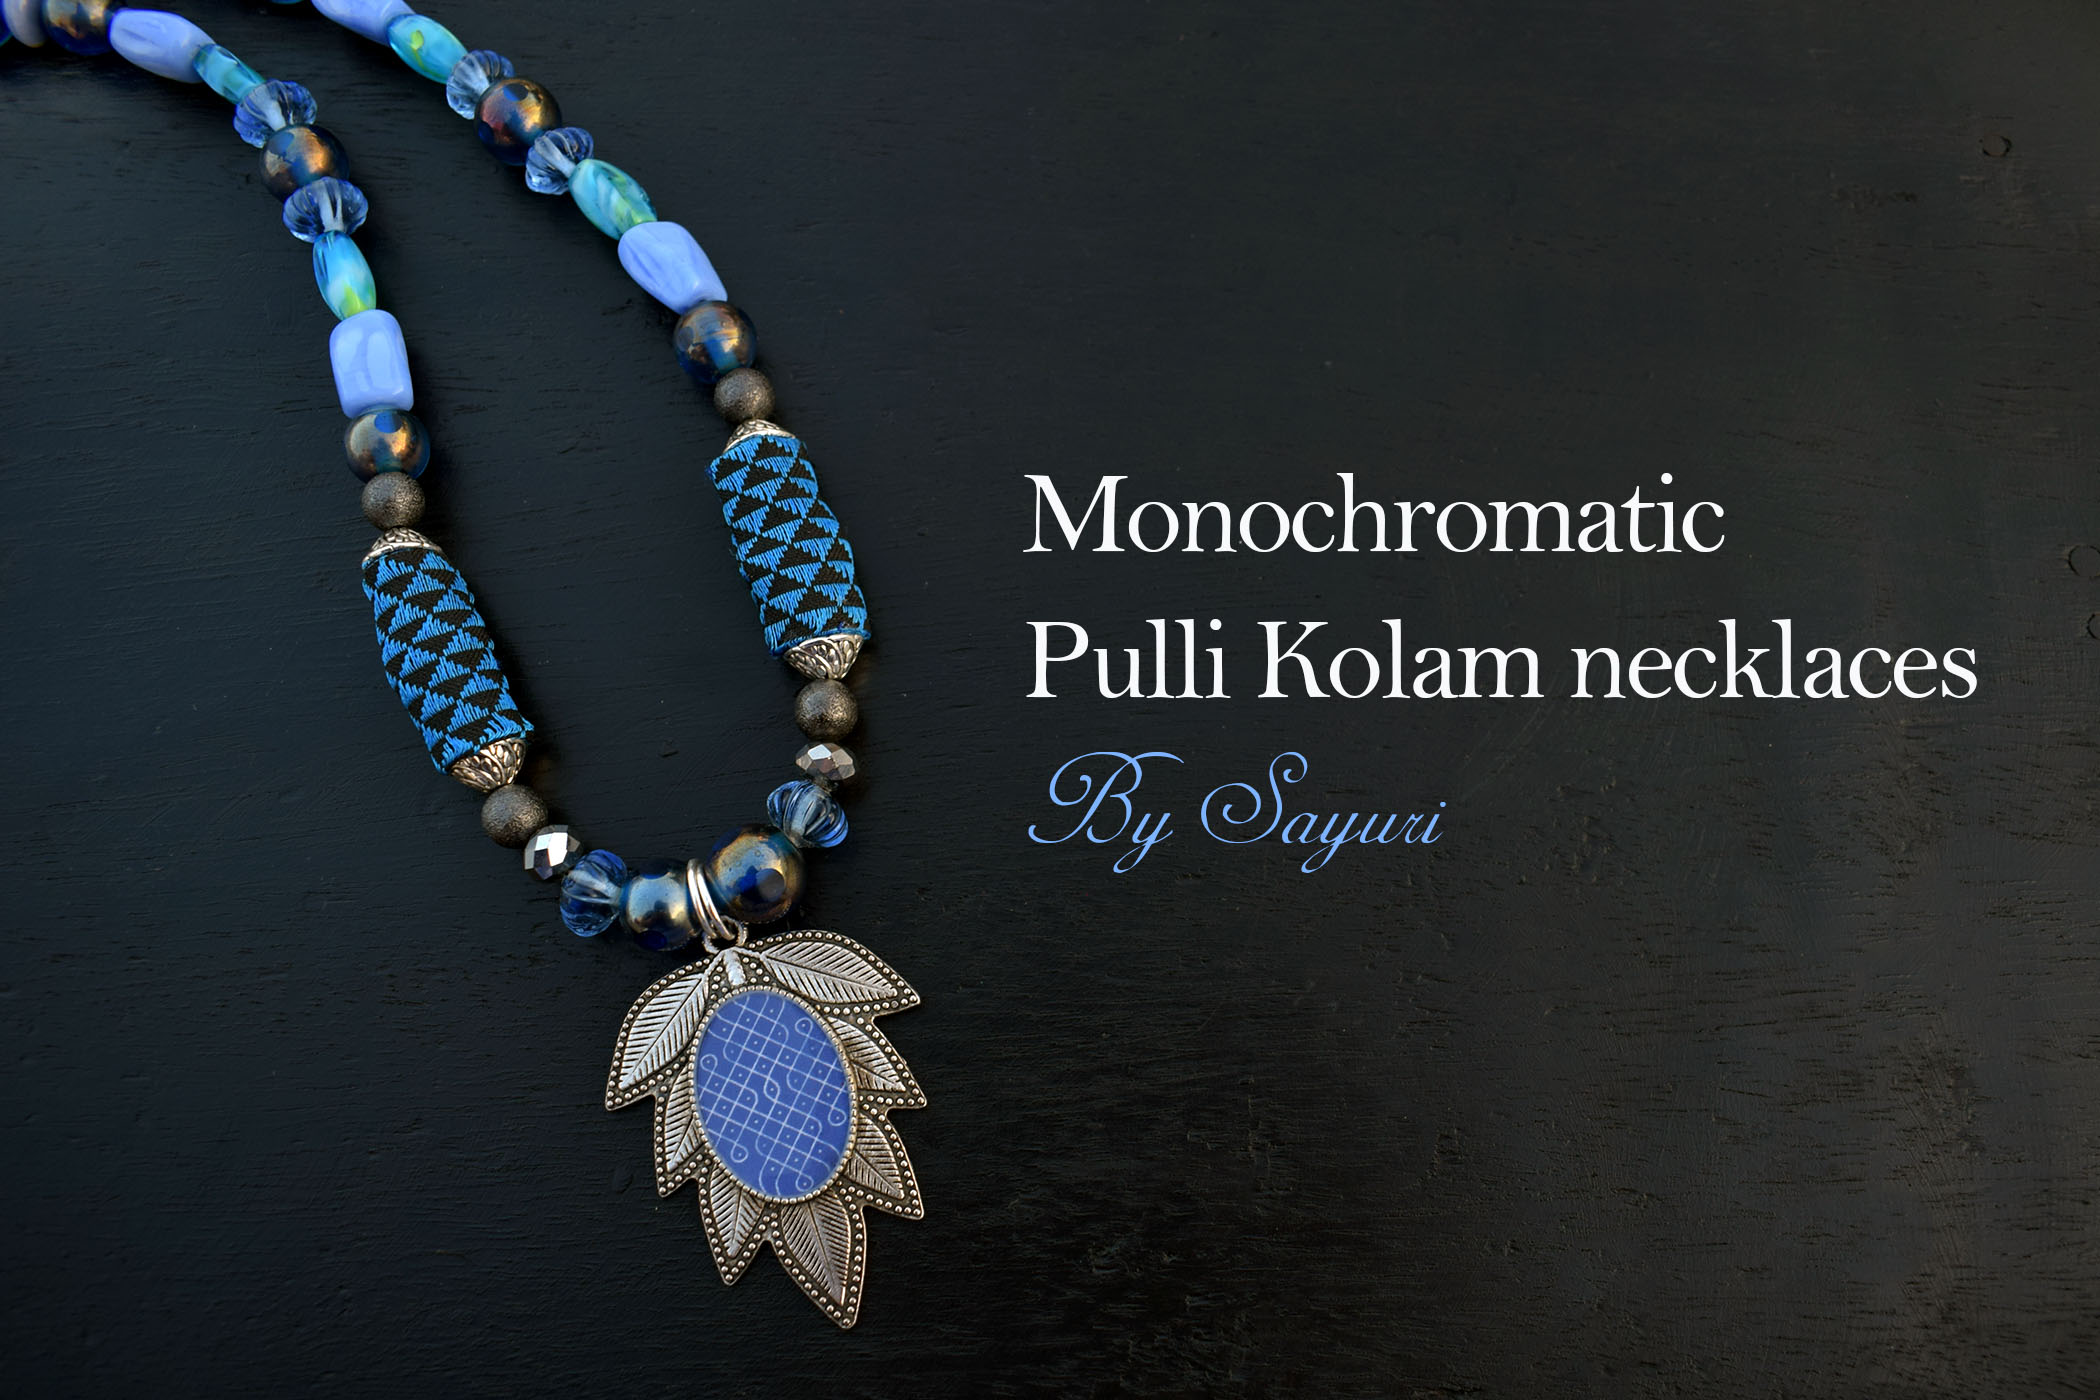 Monochromatic Pulli Kolam